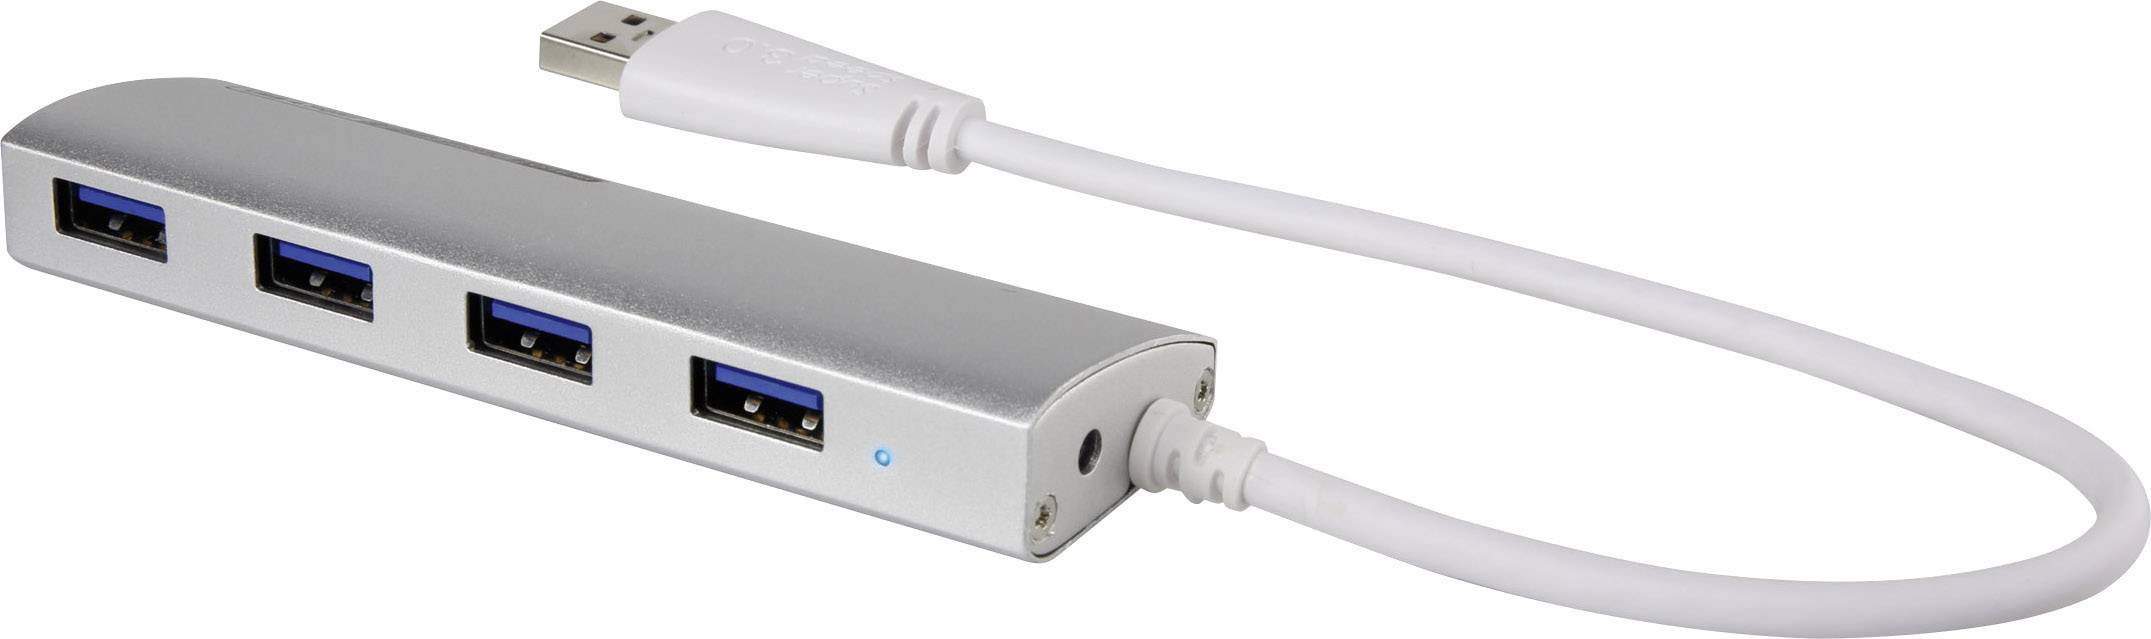 CONRAD 4 Port USB 3.0-Hub mit Aluminiumgehäuse Renkforce Aluminium